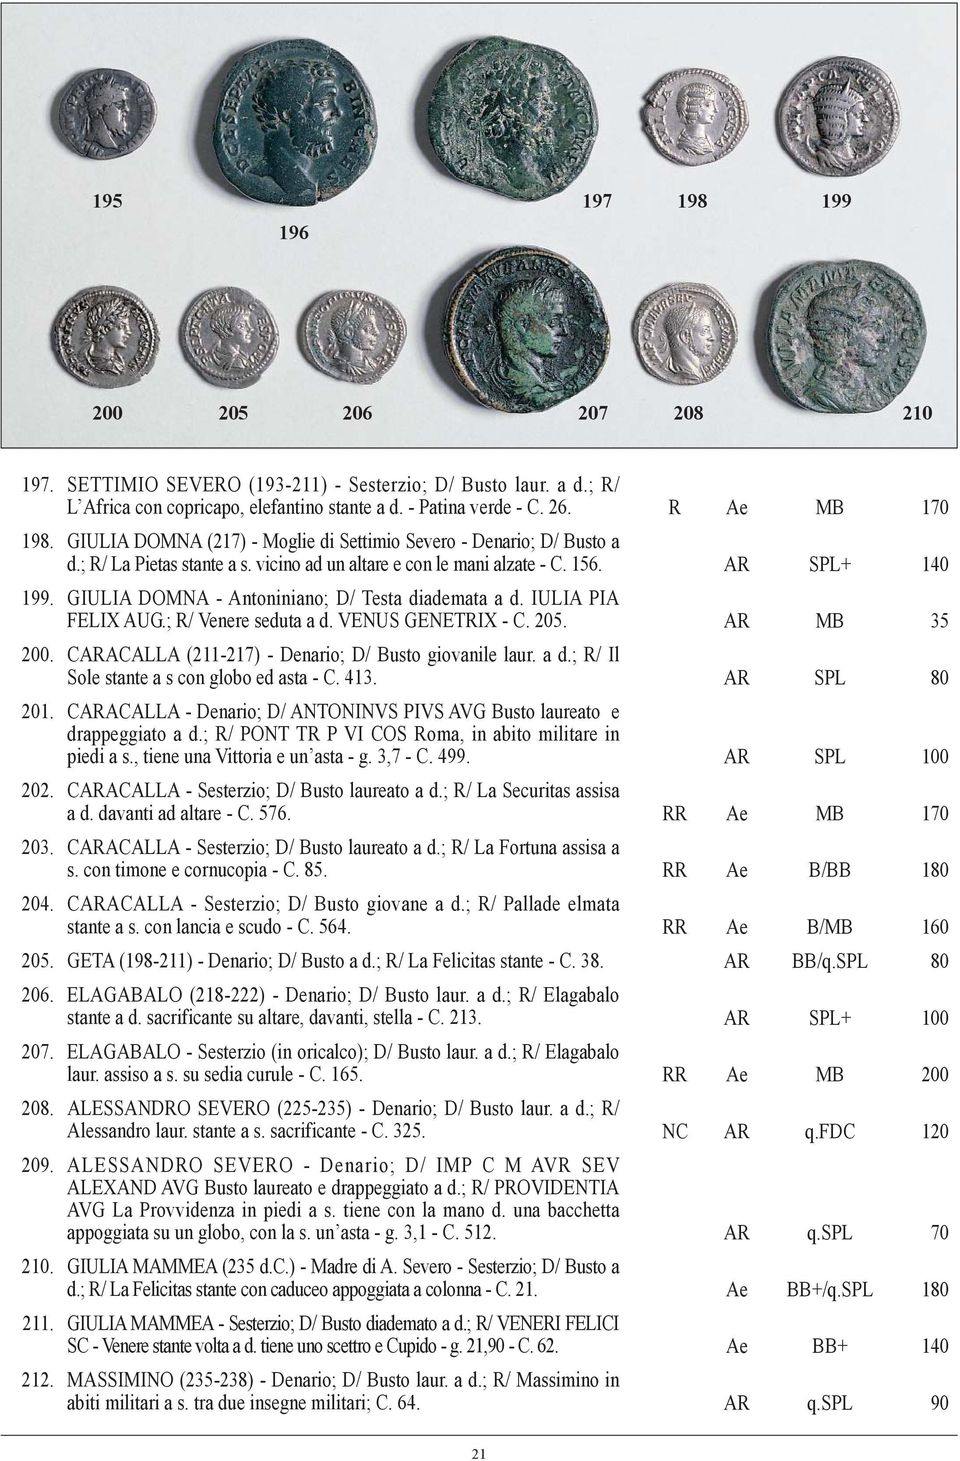 GIULIA DOMNA - Antoniniano; D/ Testa diademata a d. IULIA PIA FELIX AUG.; R/ Venere seduta a d. VENUS GENETRIX - C. 205. AR MB 35 200. CARACALLA (211-217) - Denario; D/ Busto giovanile laur. a d.; R/ Il Sole stante a s con globo ed asta - C.